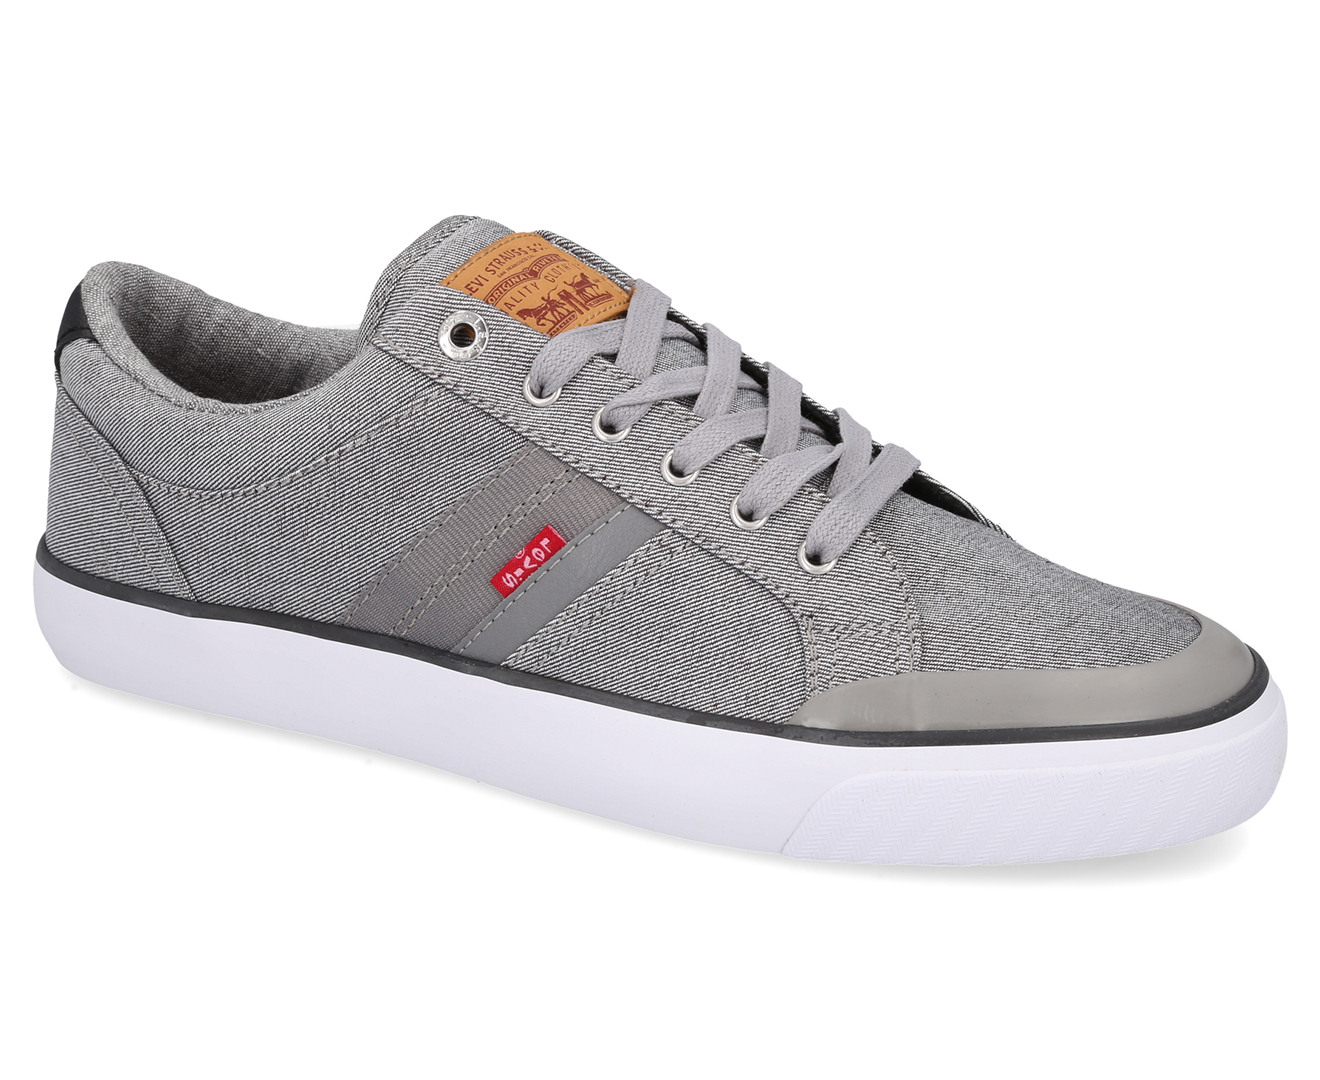 Levis Men's Hoffman Denim Casual Sneaker Shoes - Grey | Catch.co.nz